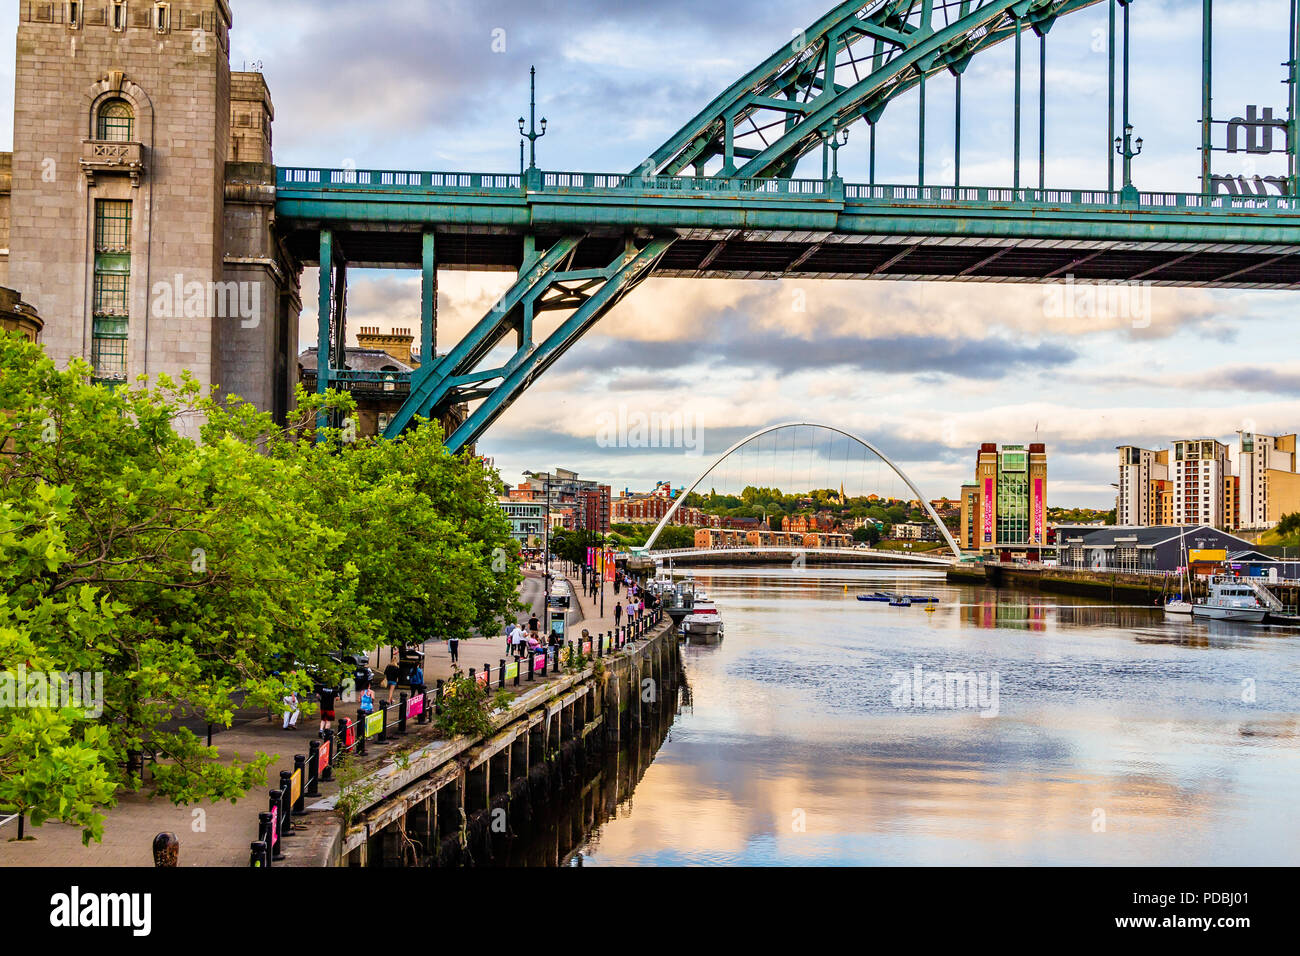 The Tyne riverside with the Tyne Bridge, Millennium Bridge and Baltic Art Gallery at sunset, Newcastle-upon-Tyne and Gateshead, UK. Stock Photo